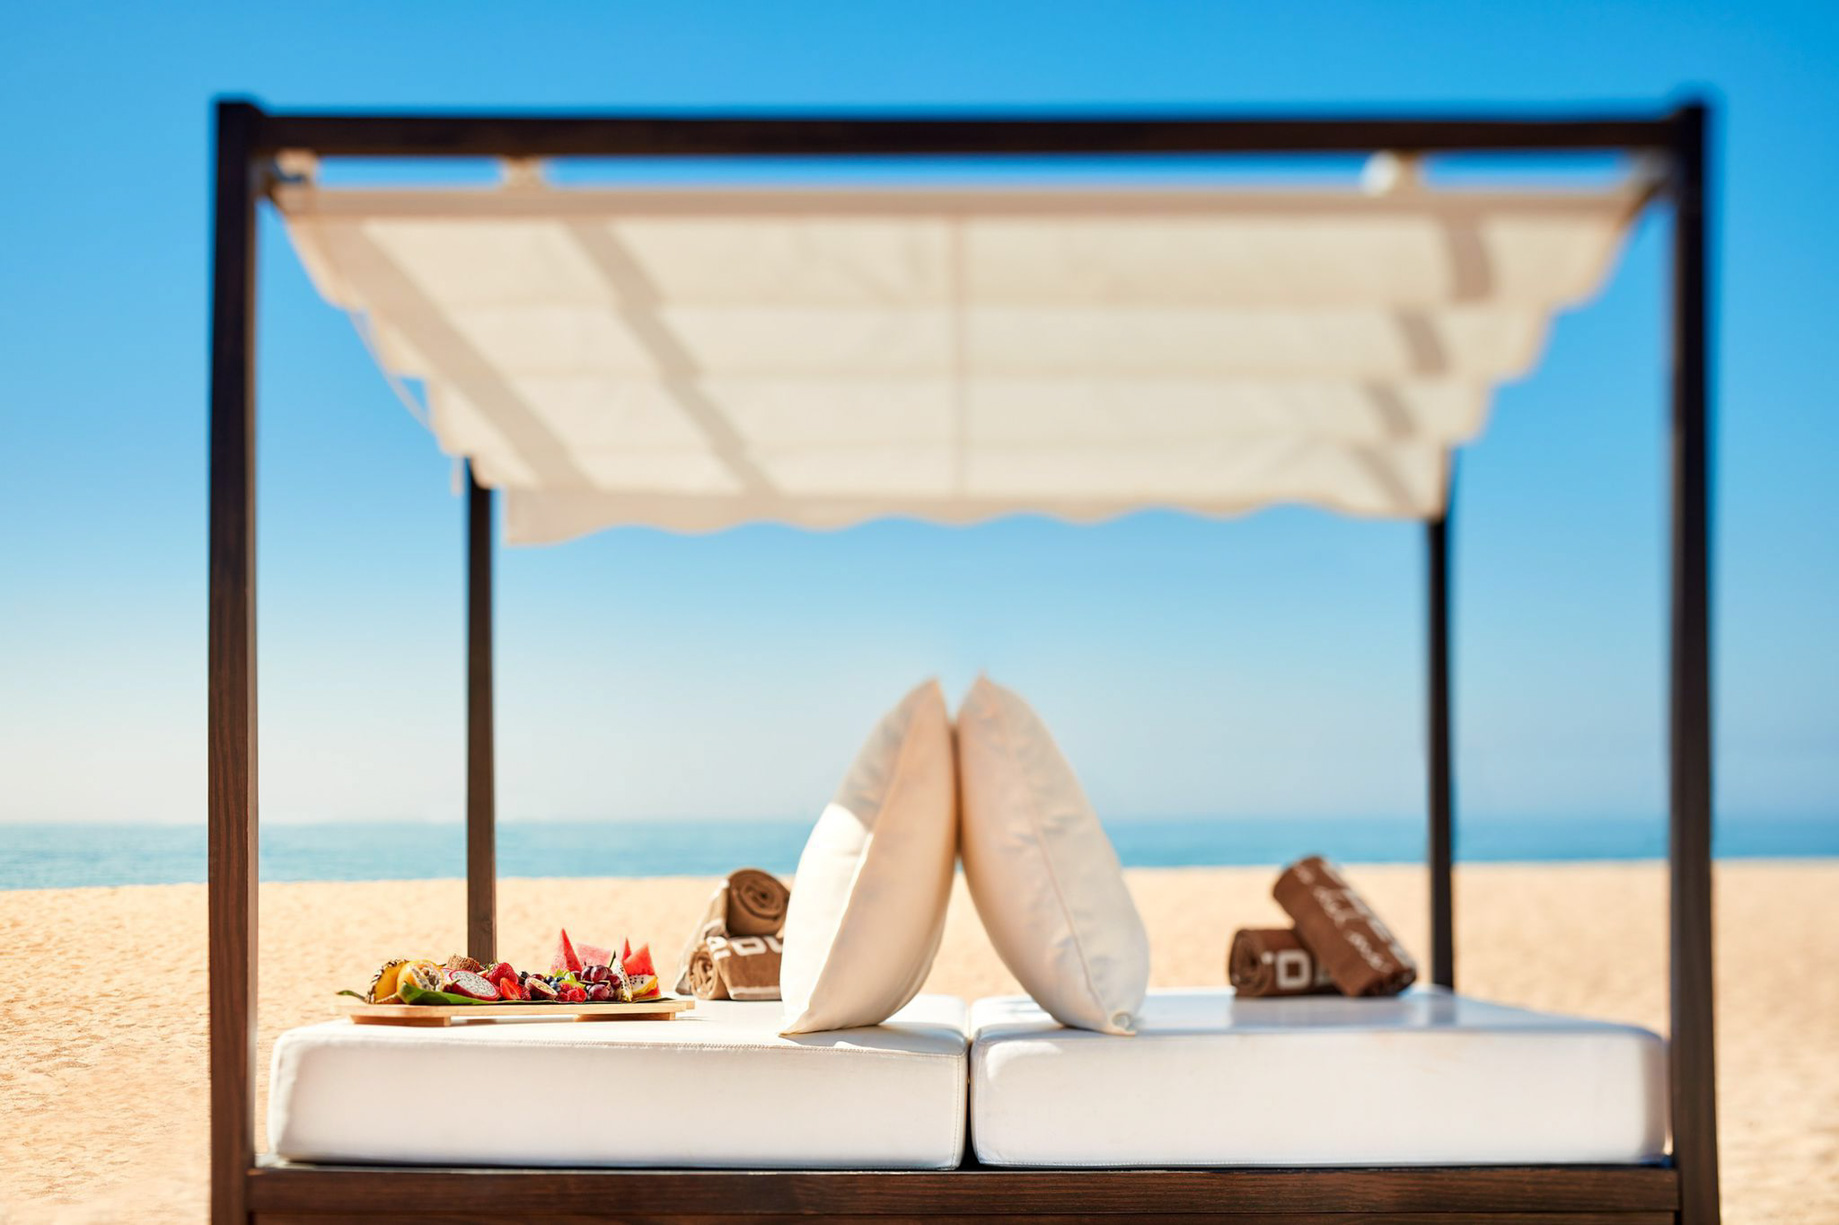 Tivoli Marina Vilamoura Algarve Resort – Portugal – Beach Concession